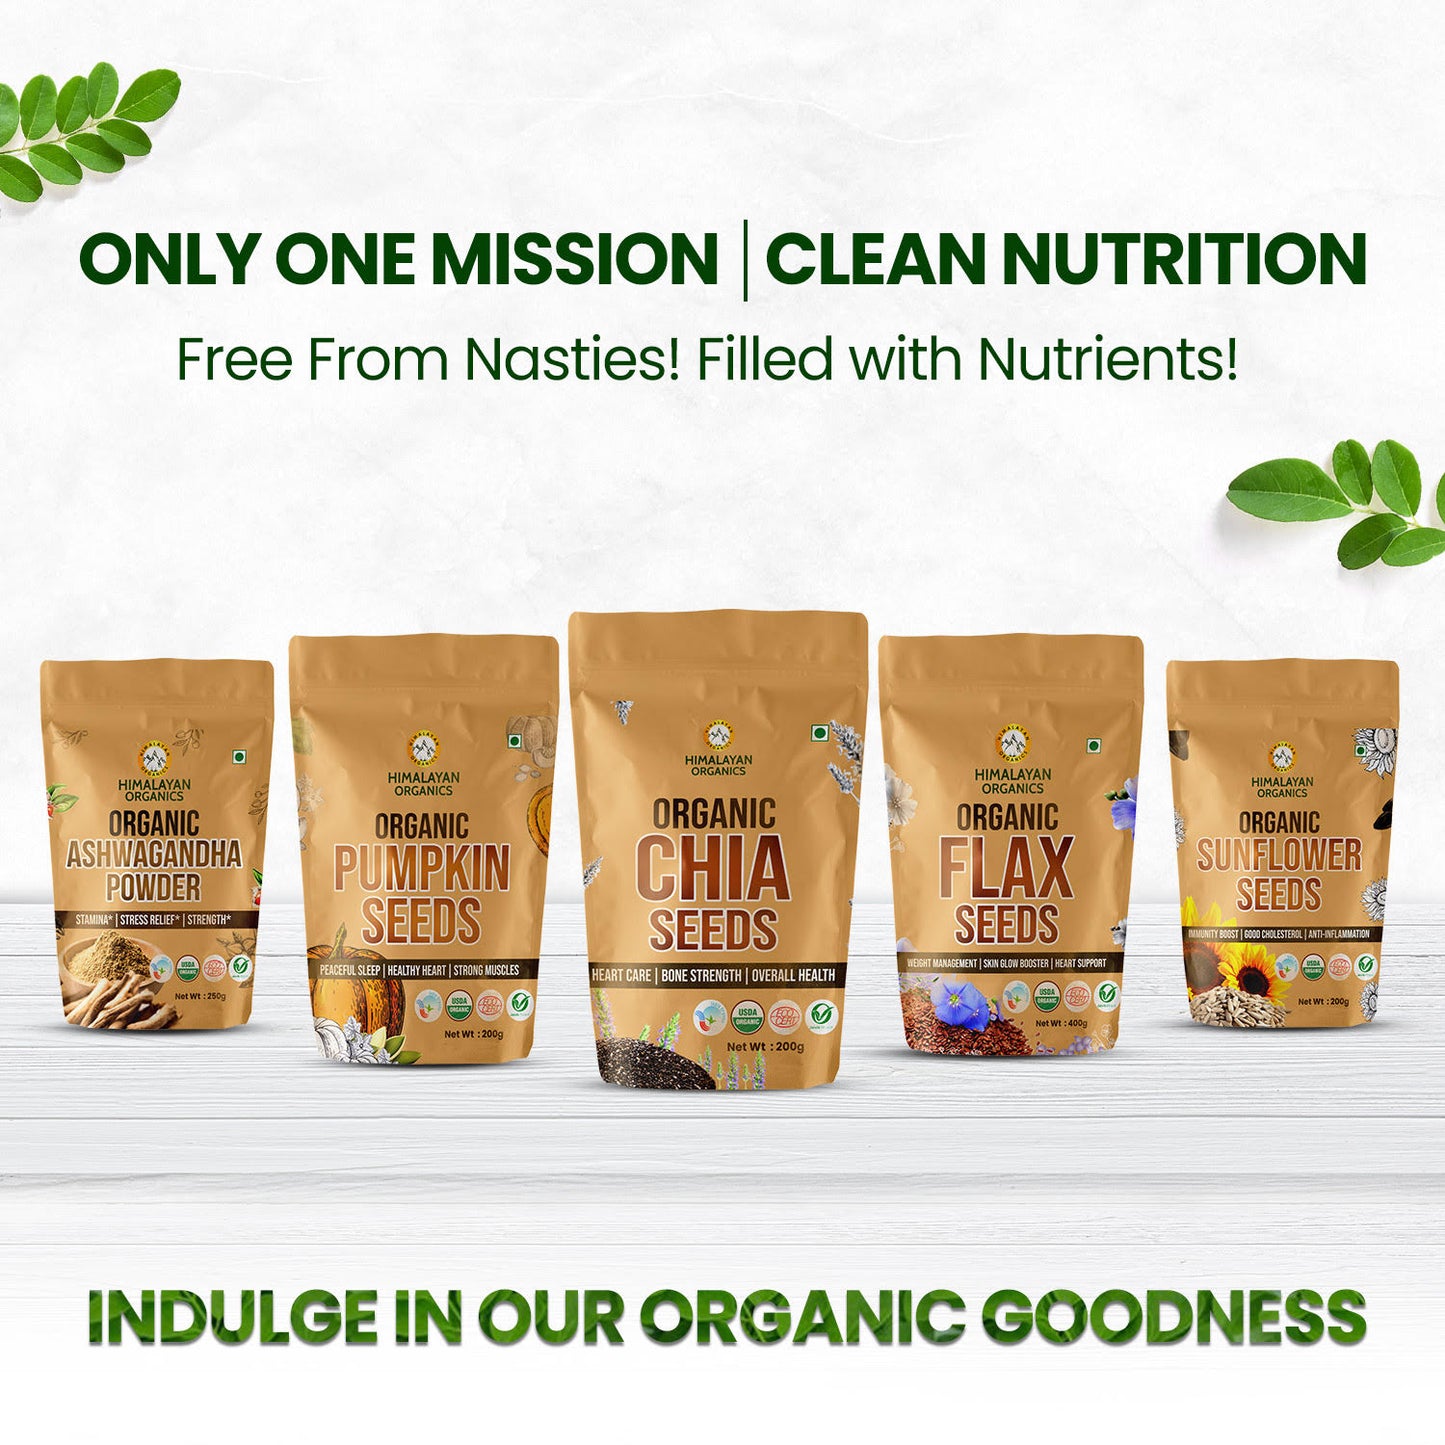 Himalayan Organics Certified Organic Moringa Powder (Moringa Oleifera) - Herbal Supplement for Overall Wellness- 350g